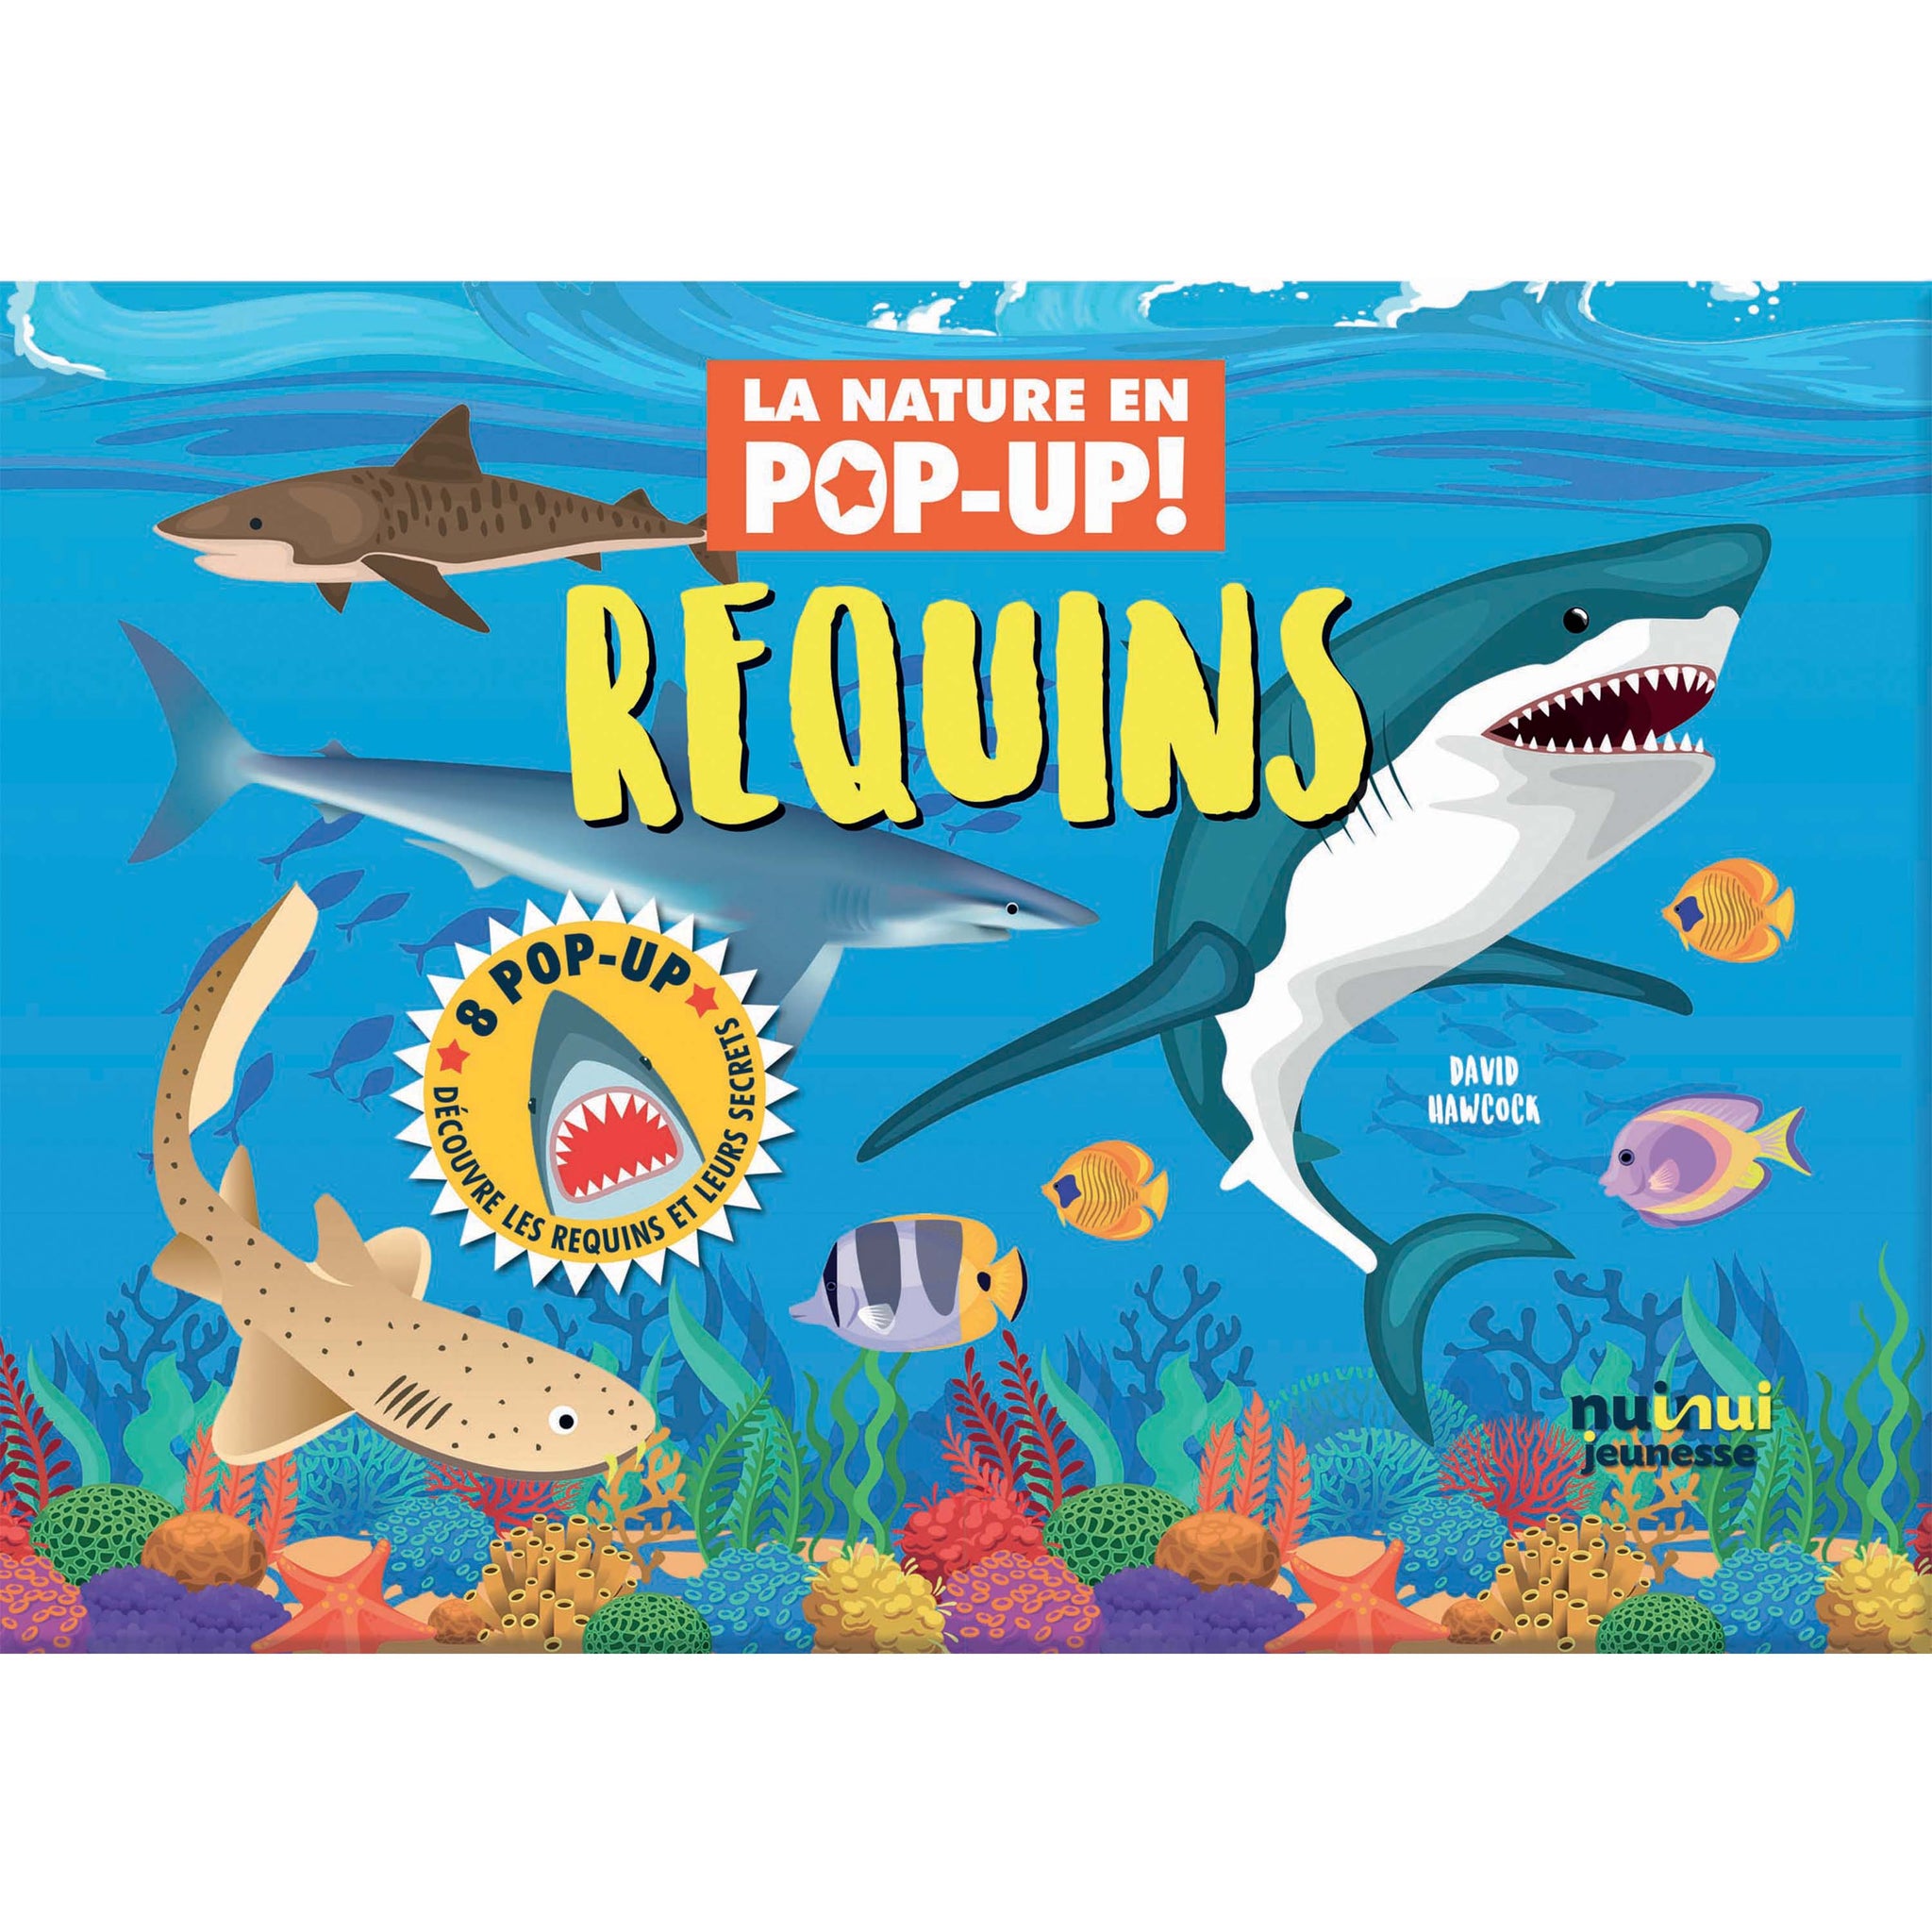 La nature en pop-up - Requins